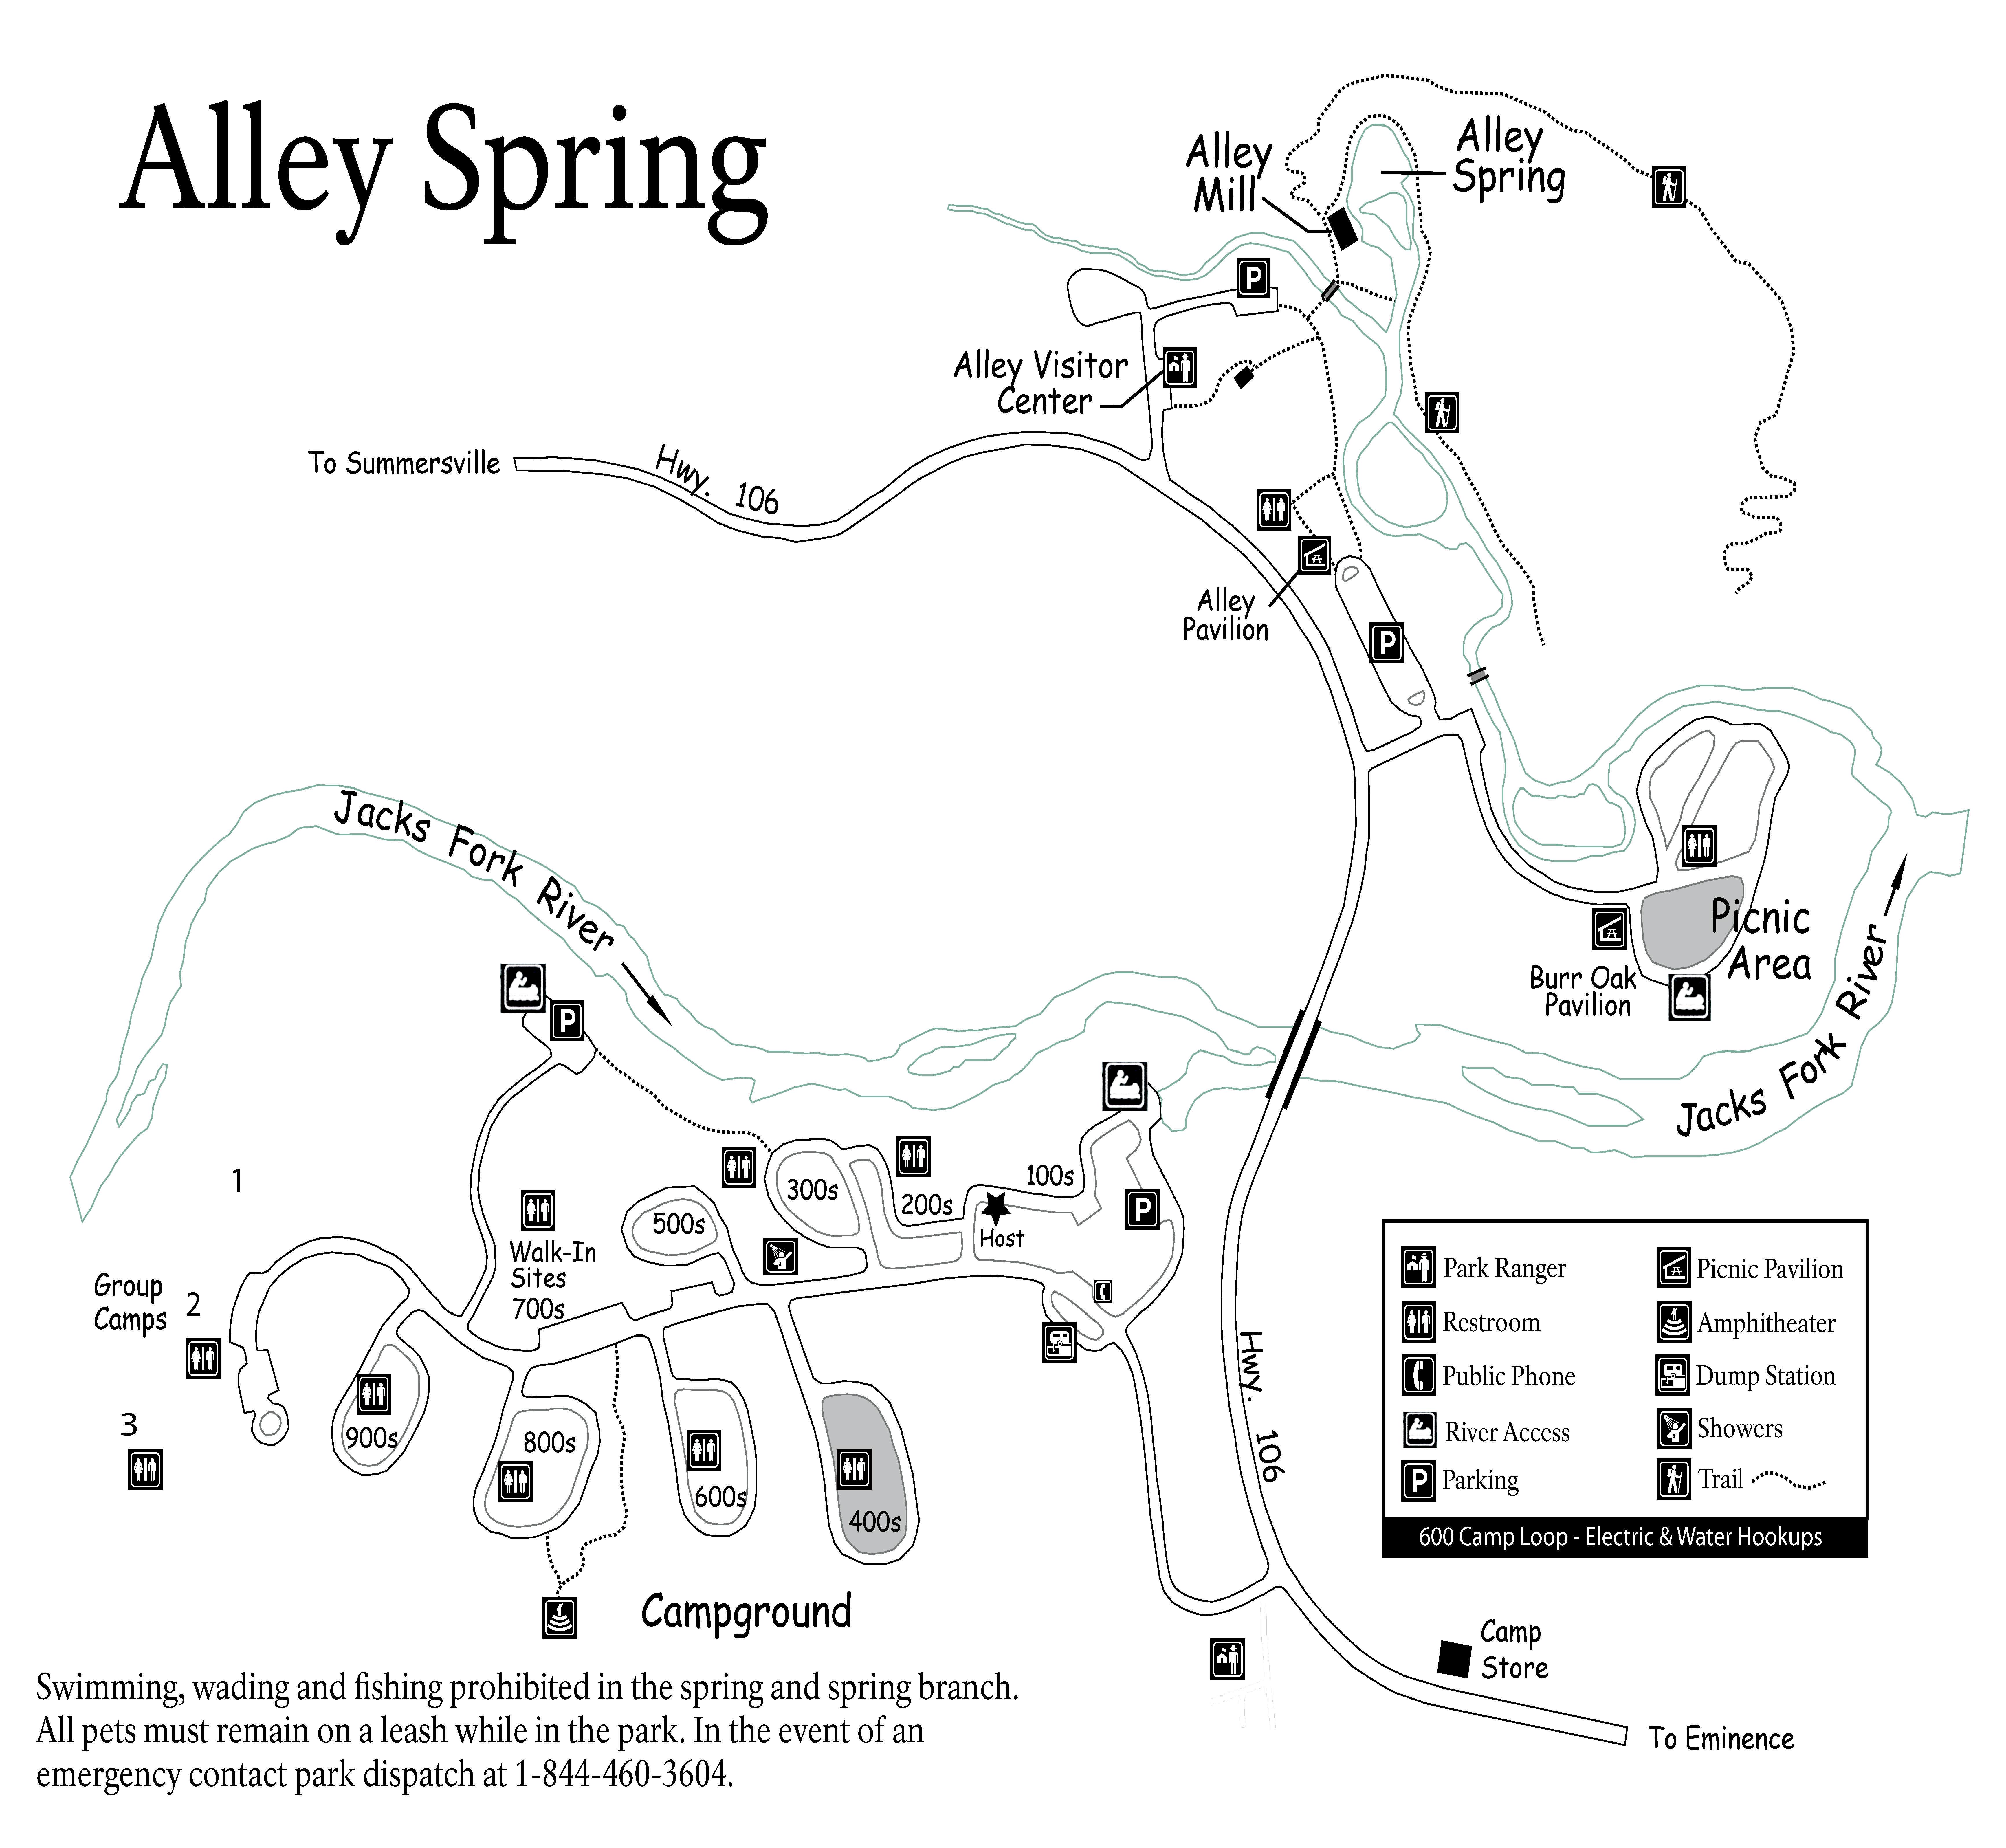 a map showing campsites, roads, trails, restrooms, river access, showers